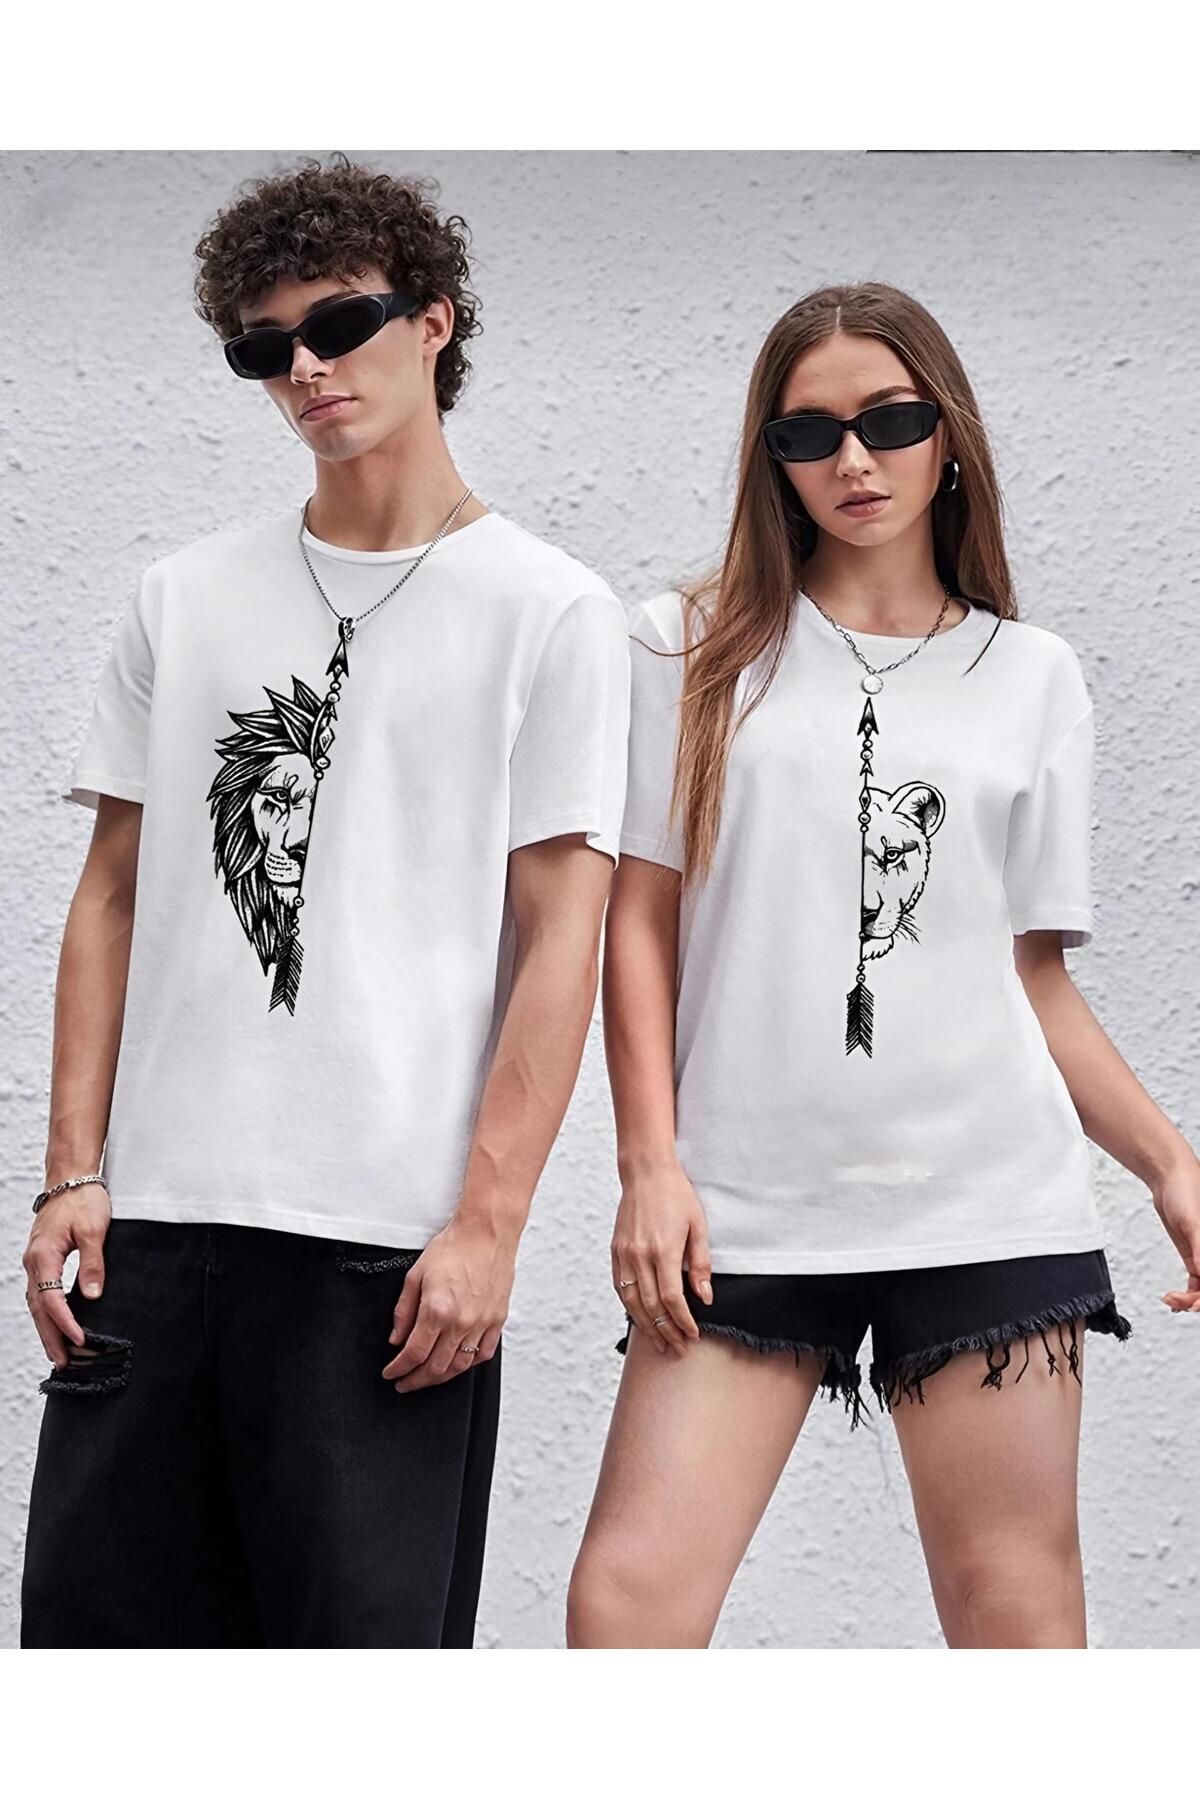 NewCabin Yeni Sezon Oversize Pamuklu A Kalite Sevgili Çift Kombinleri Aslan kaplan Tasarım 2 Li Ürün T-shirt